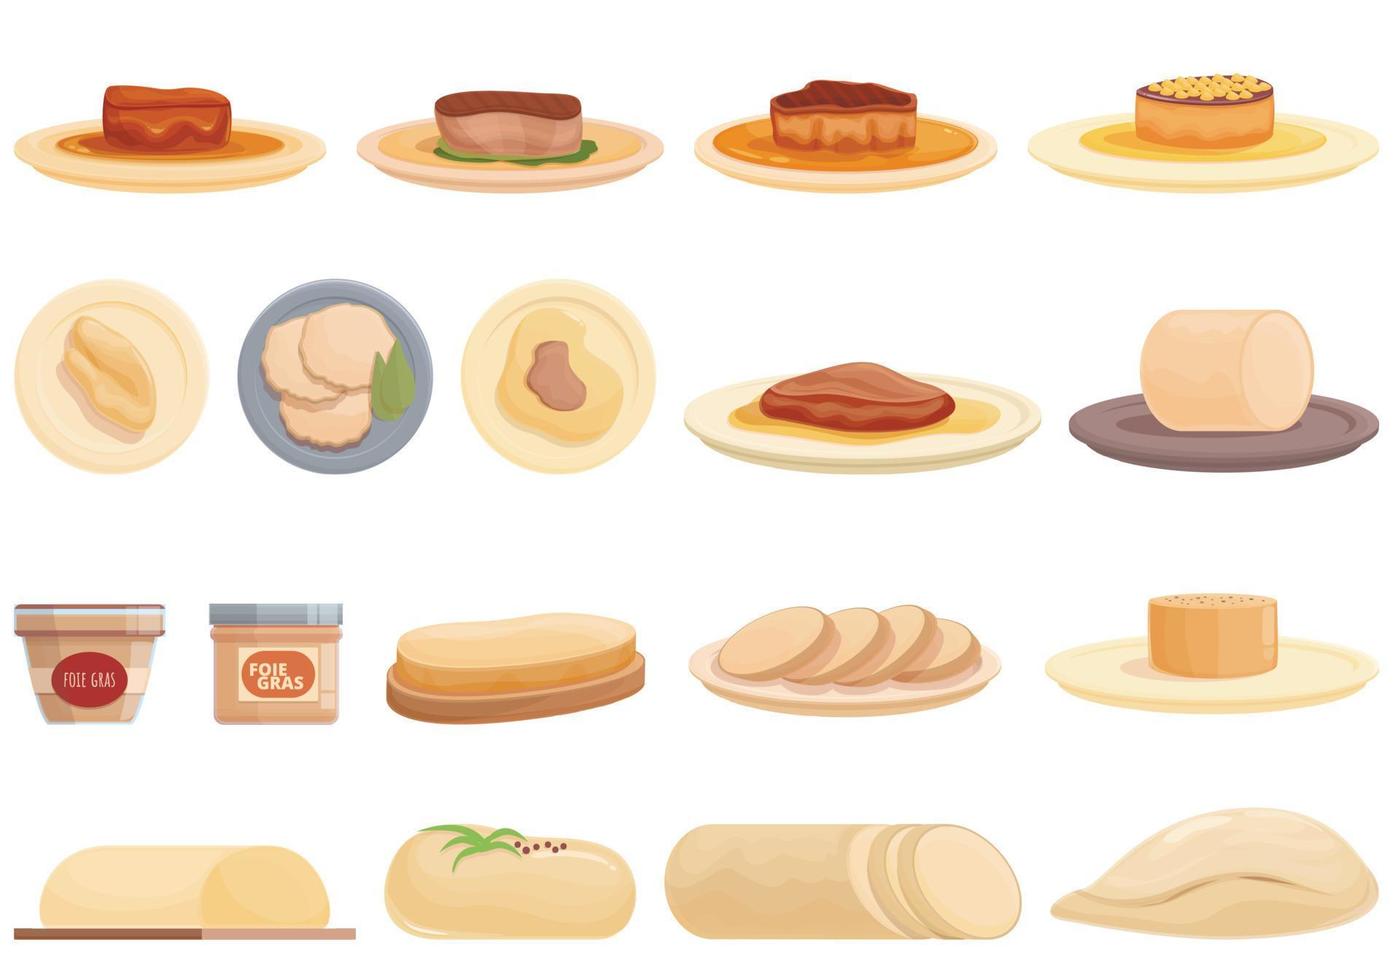 iconos de foie gras establecer vector de dibujos animados. comida francés